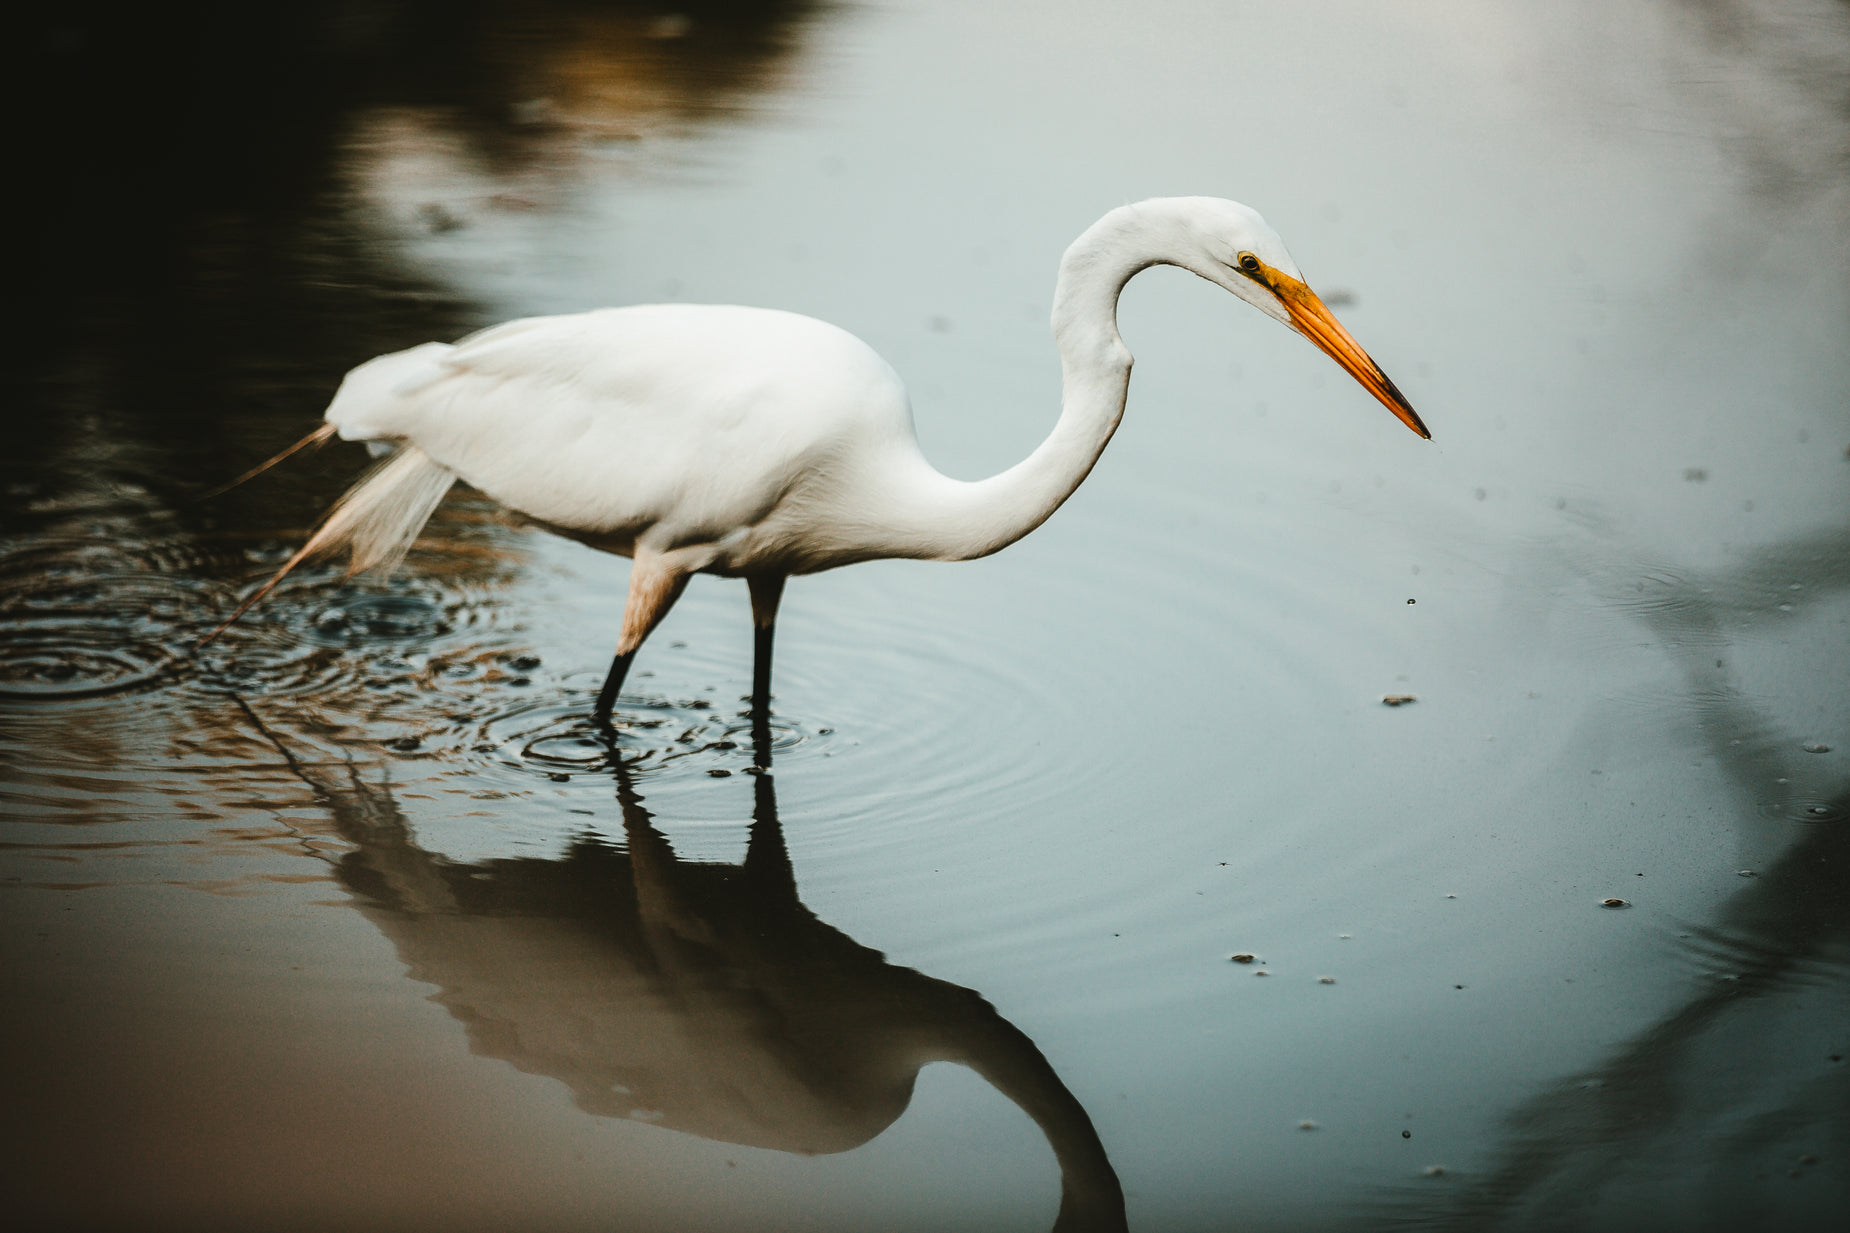 a white heron wading through some water